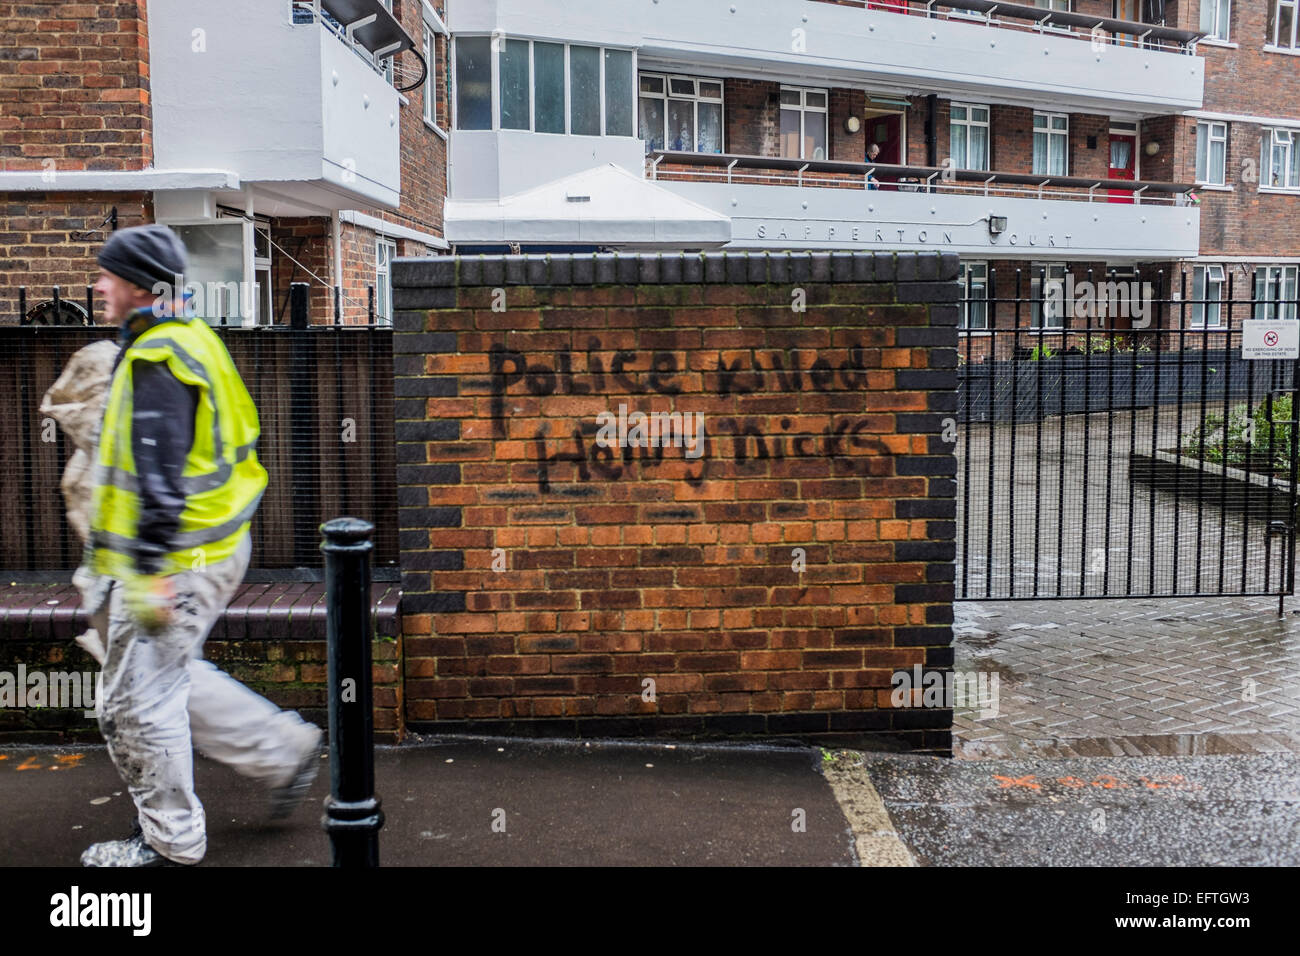 Anti police graffiti on a brick wall in north London Stock Photo